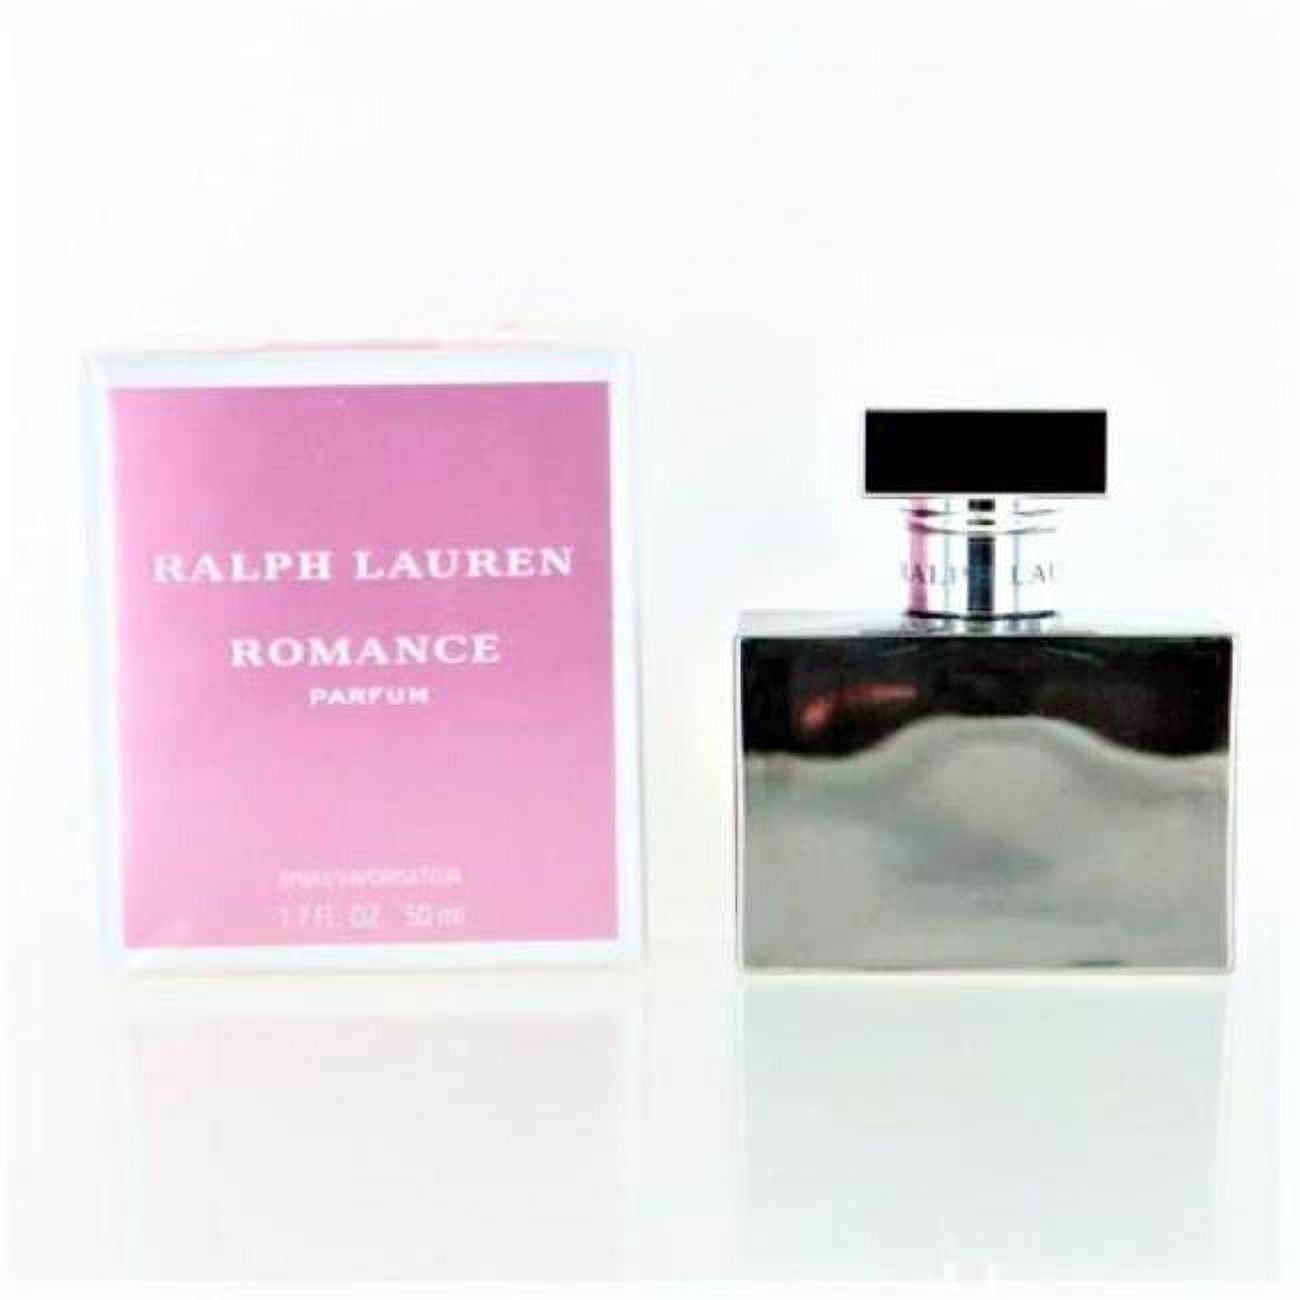 ROMANCE by Ralph Lauren Eau De Parfum Spray 1 oz (Women), 1 - Kroger